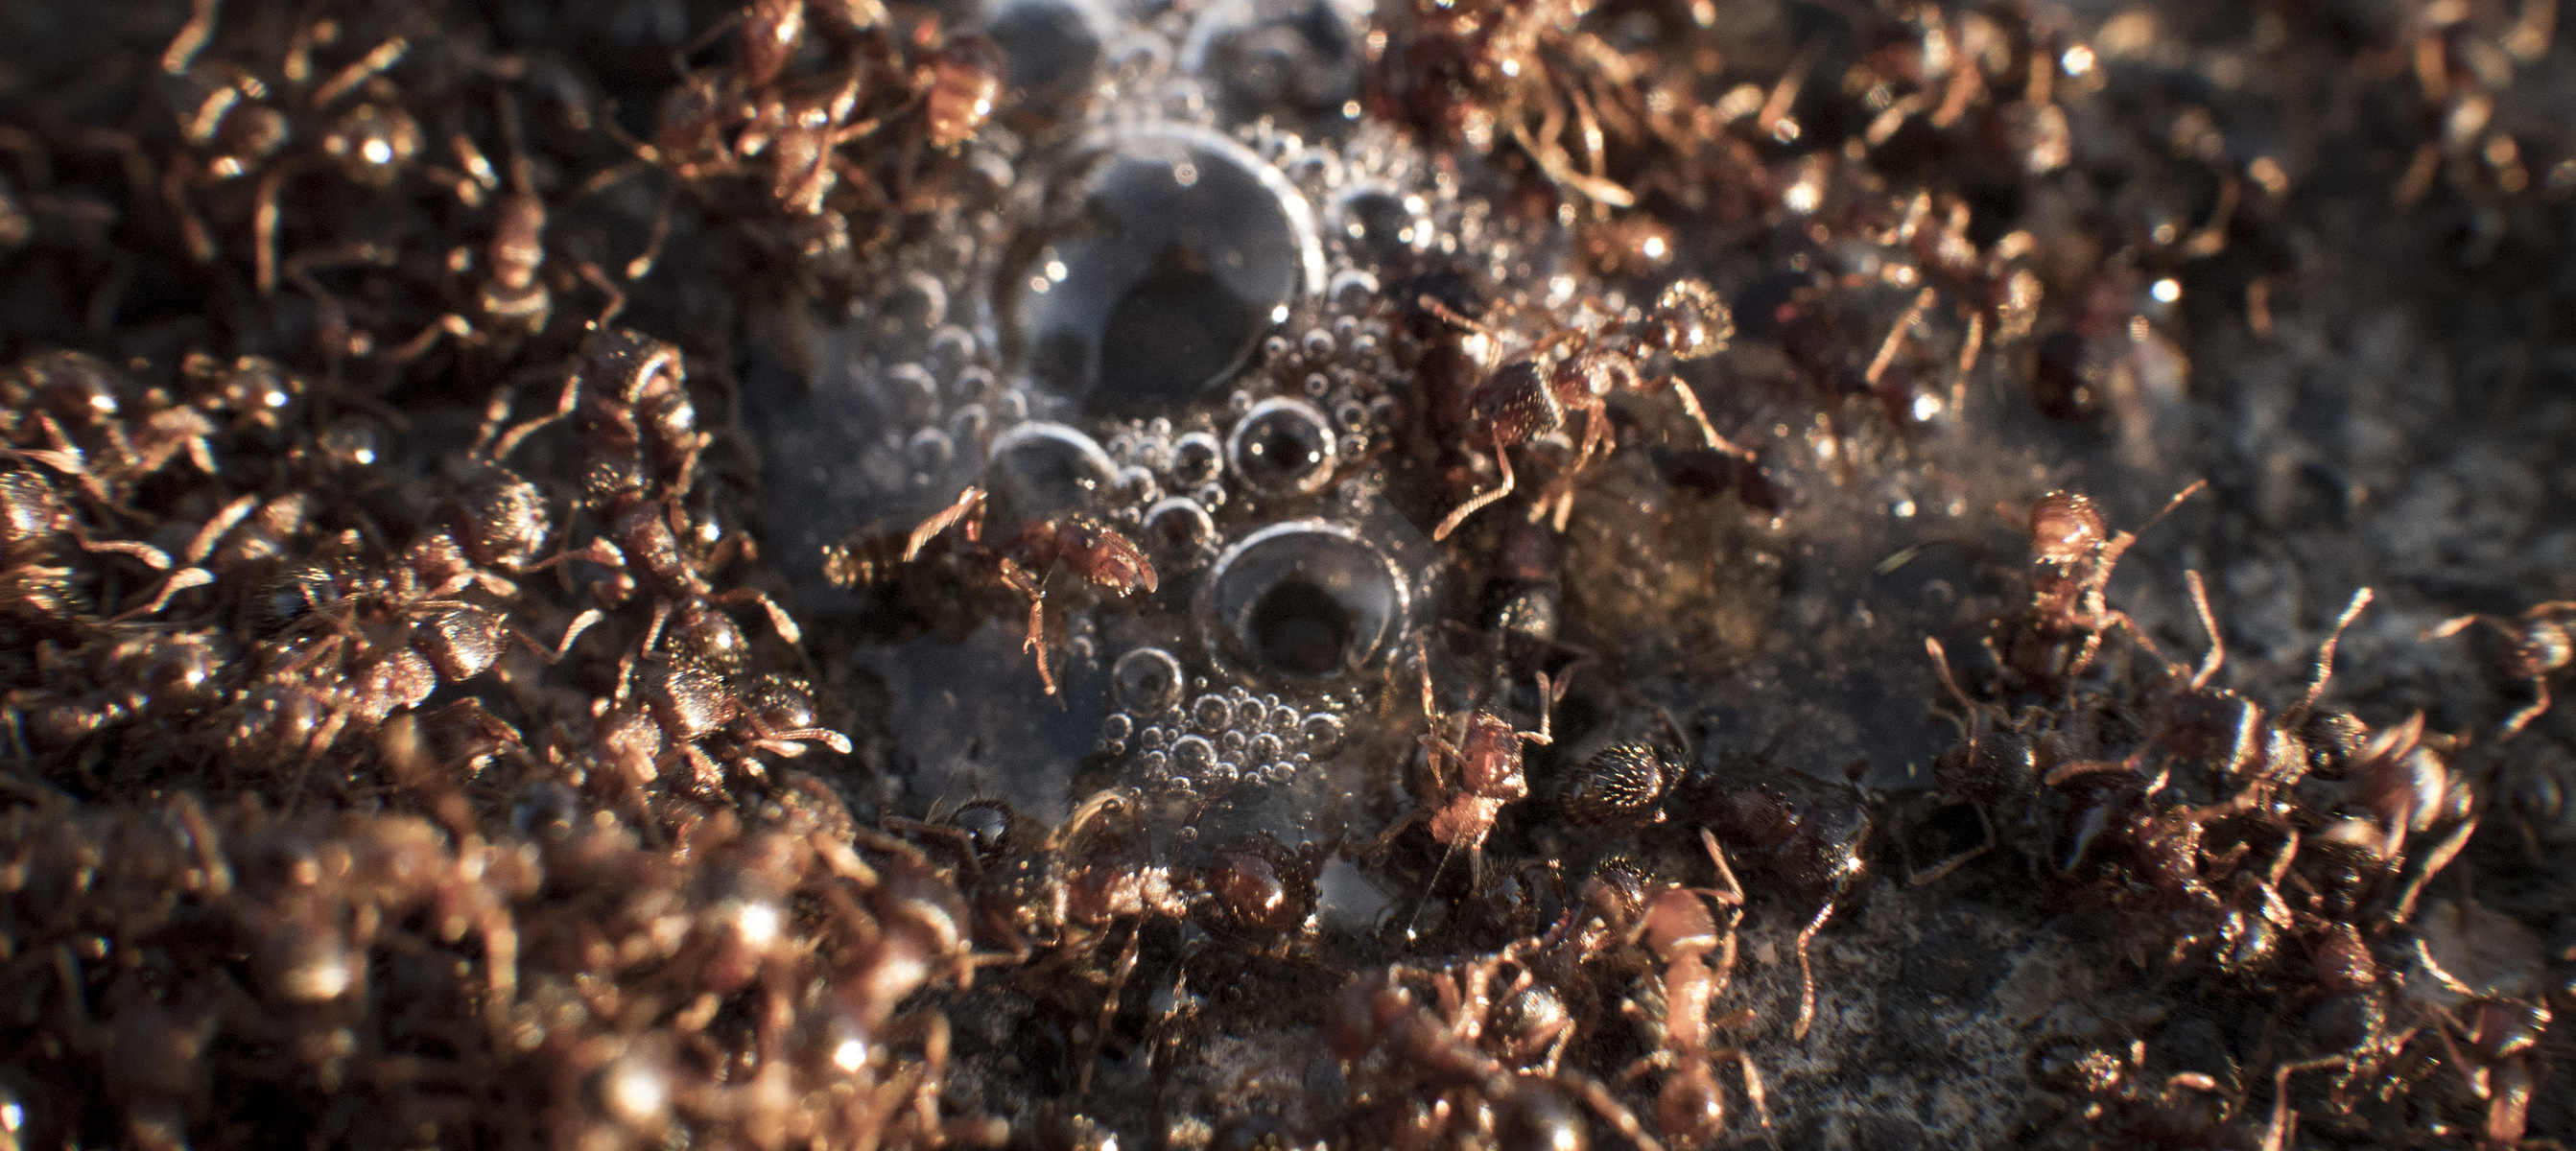 ant battle